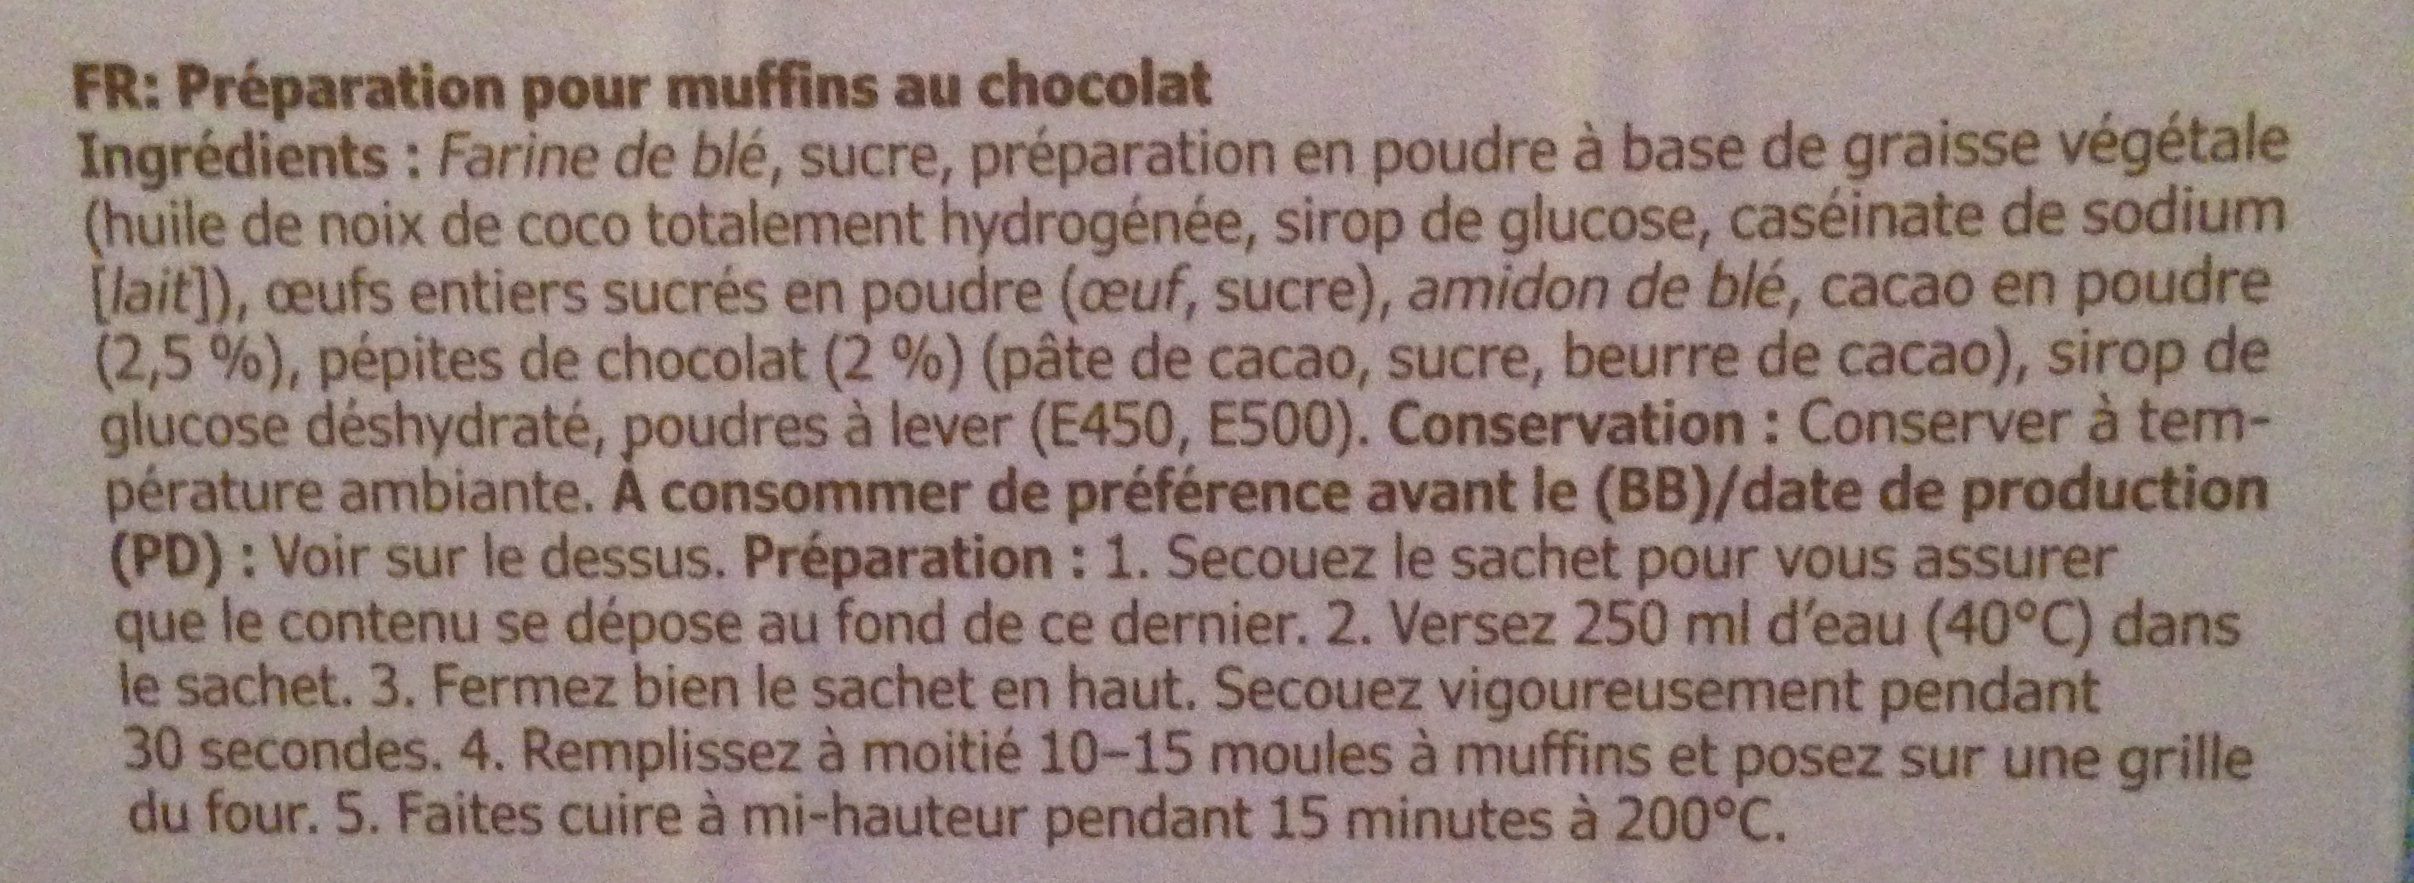 Préparation pour Muffins au Chocolat - Ingrediënten - fr